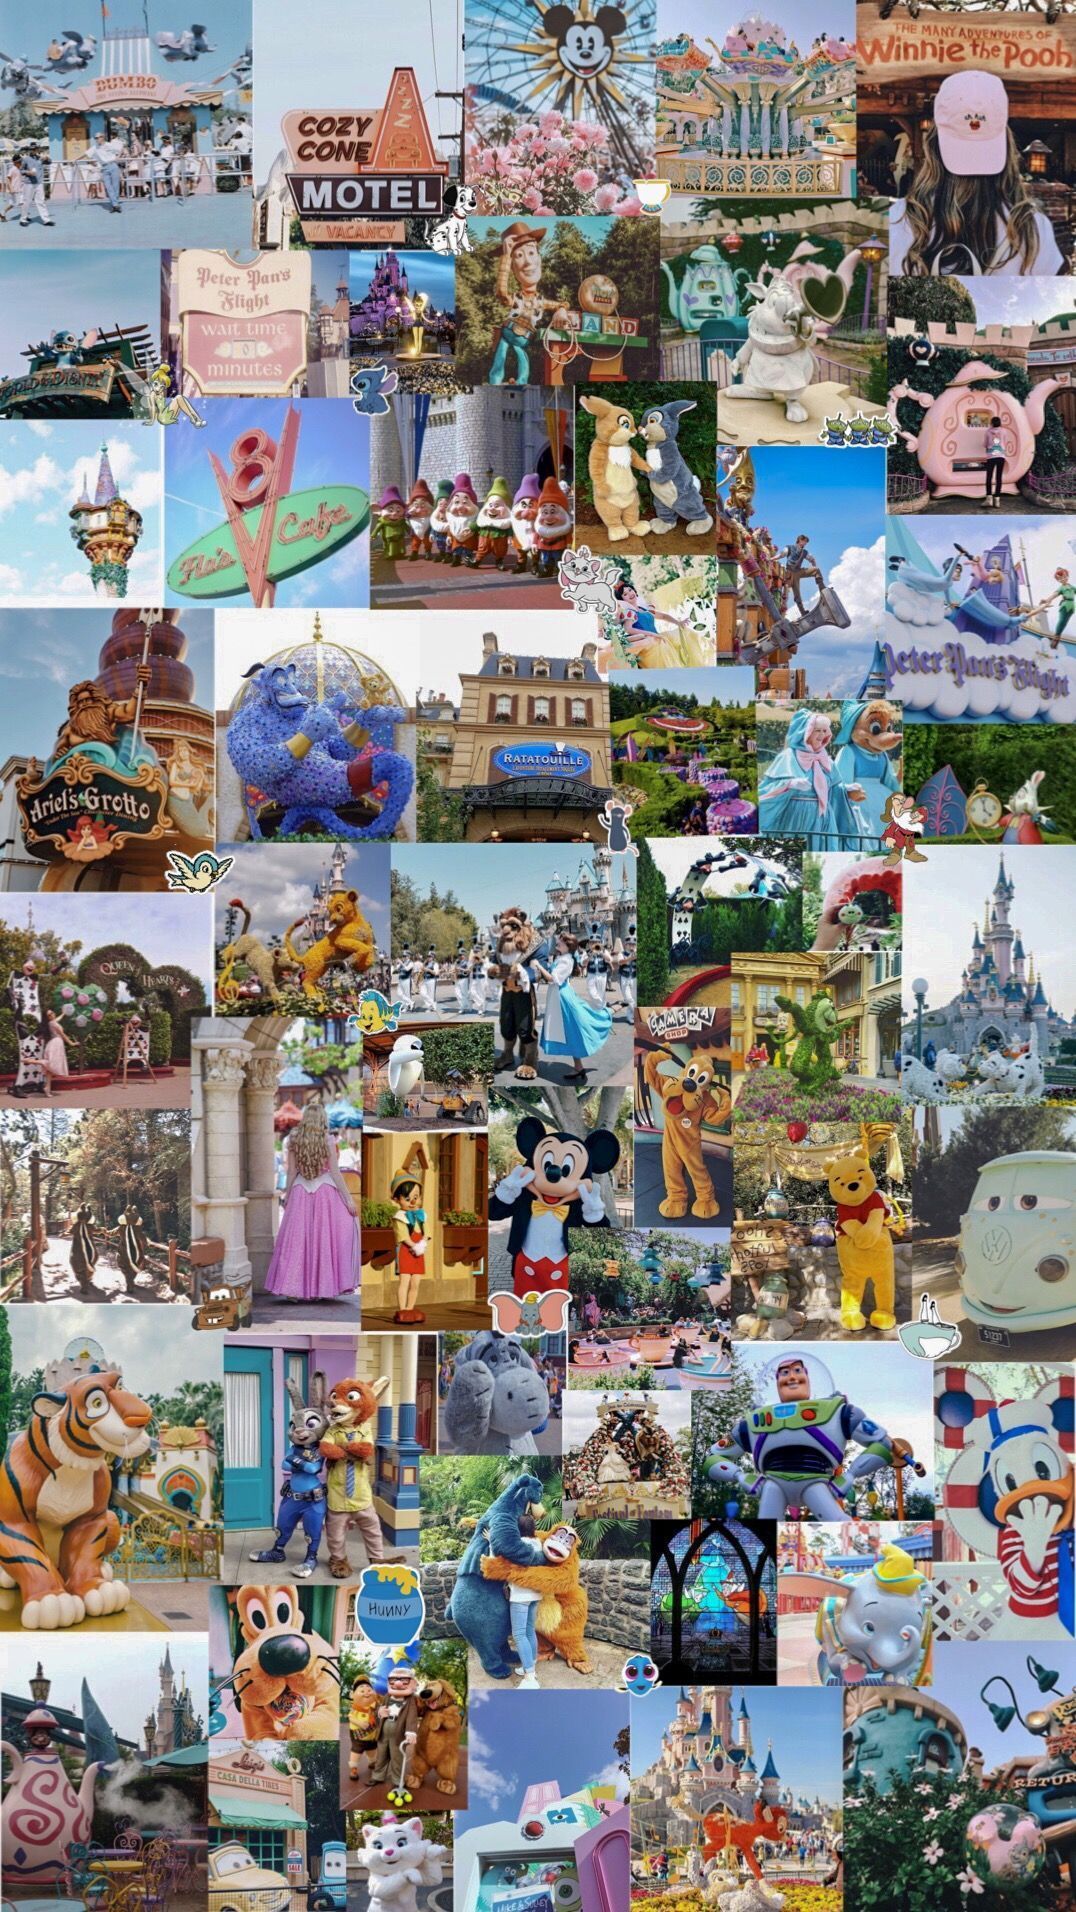 A collage of photos from Disneyland Paris - Disney